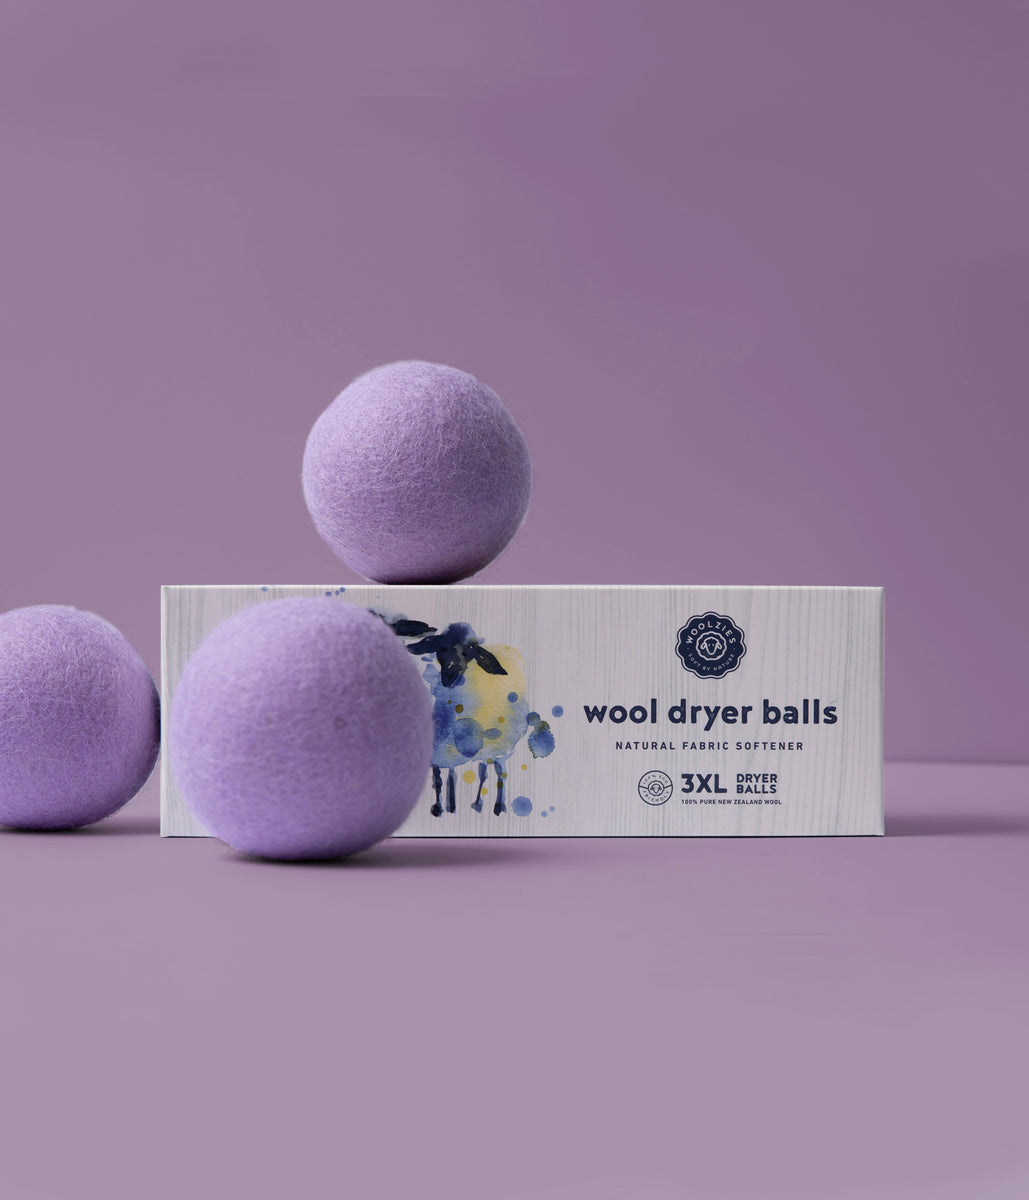 DIY Laundry Wool Dryer Balls with Lemon and dōTERRA Lavender